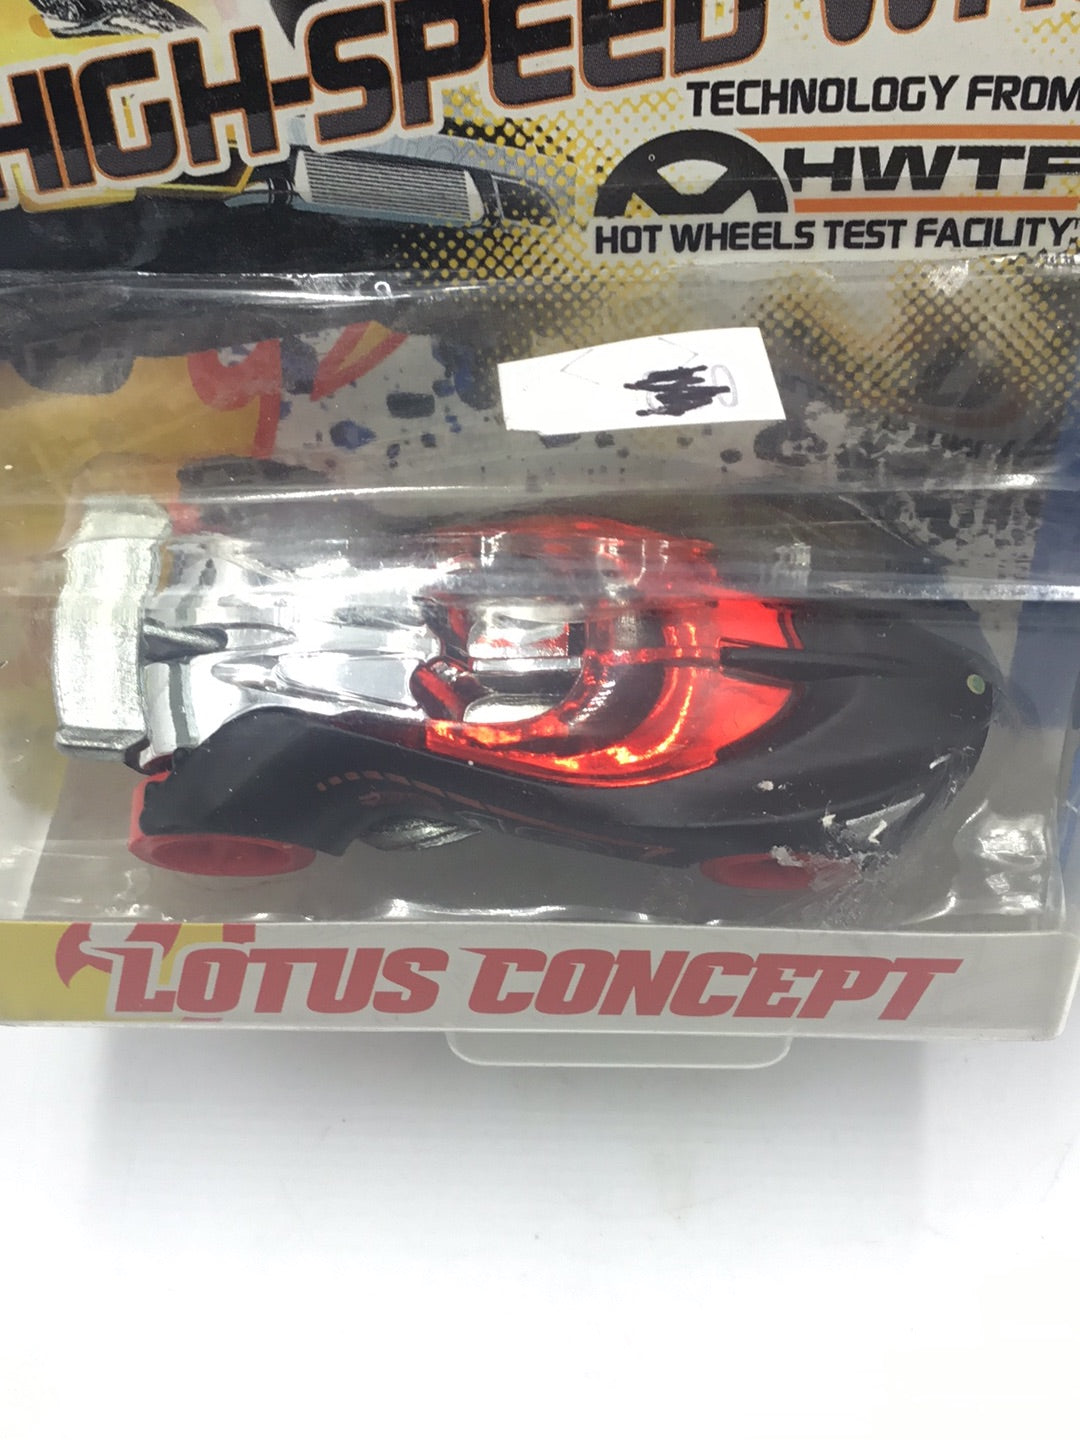 Hot wheels HWTF Lotus Concept NN6